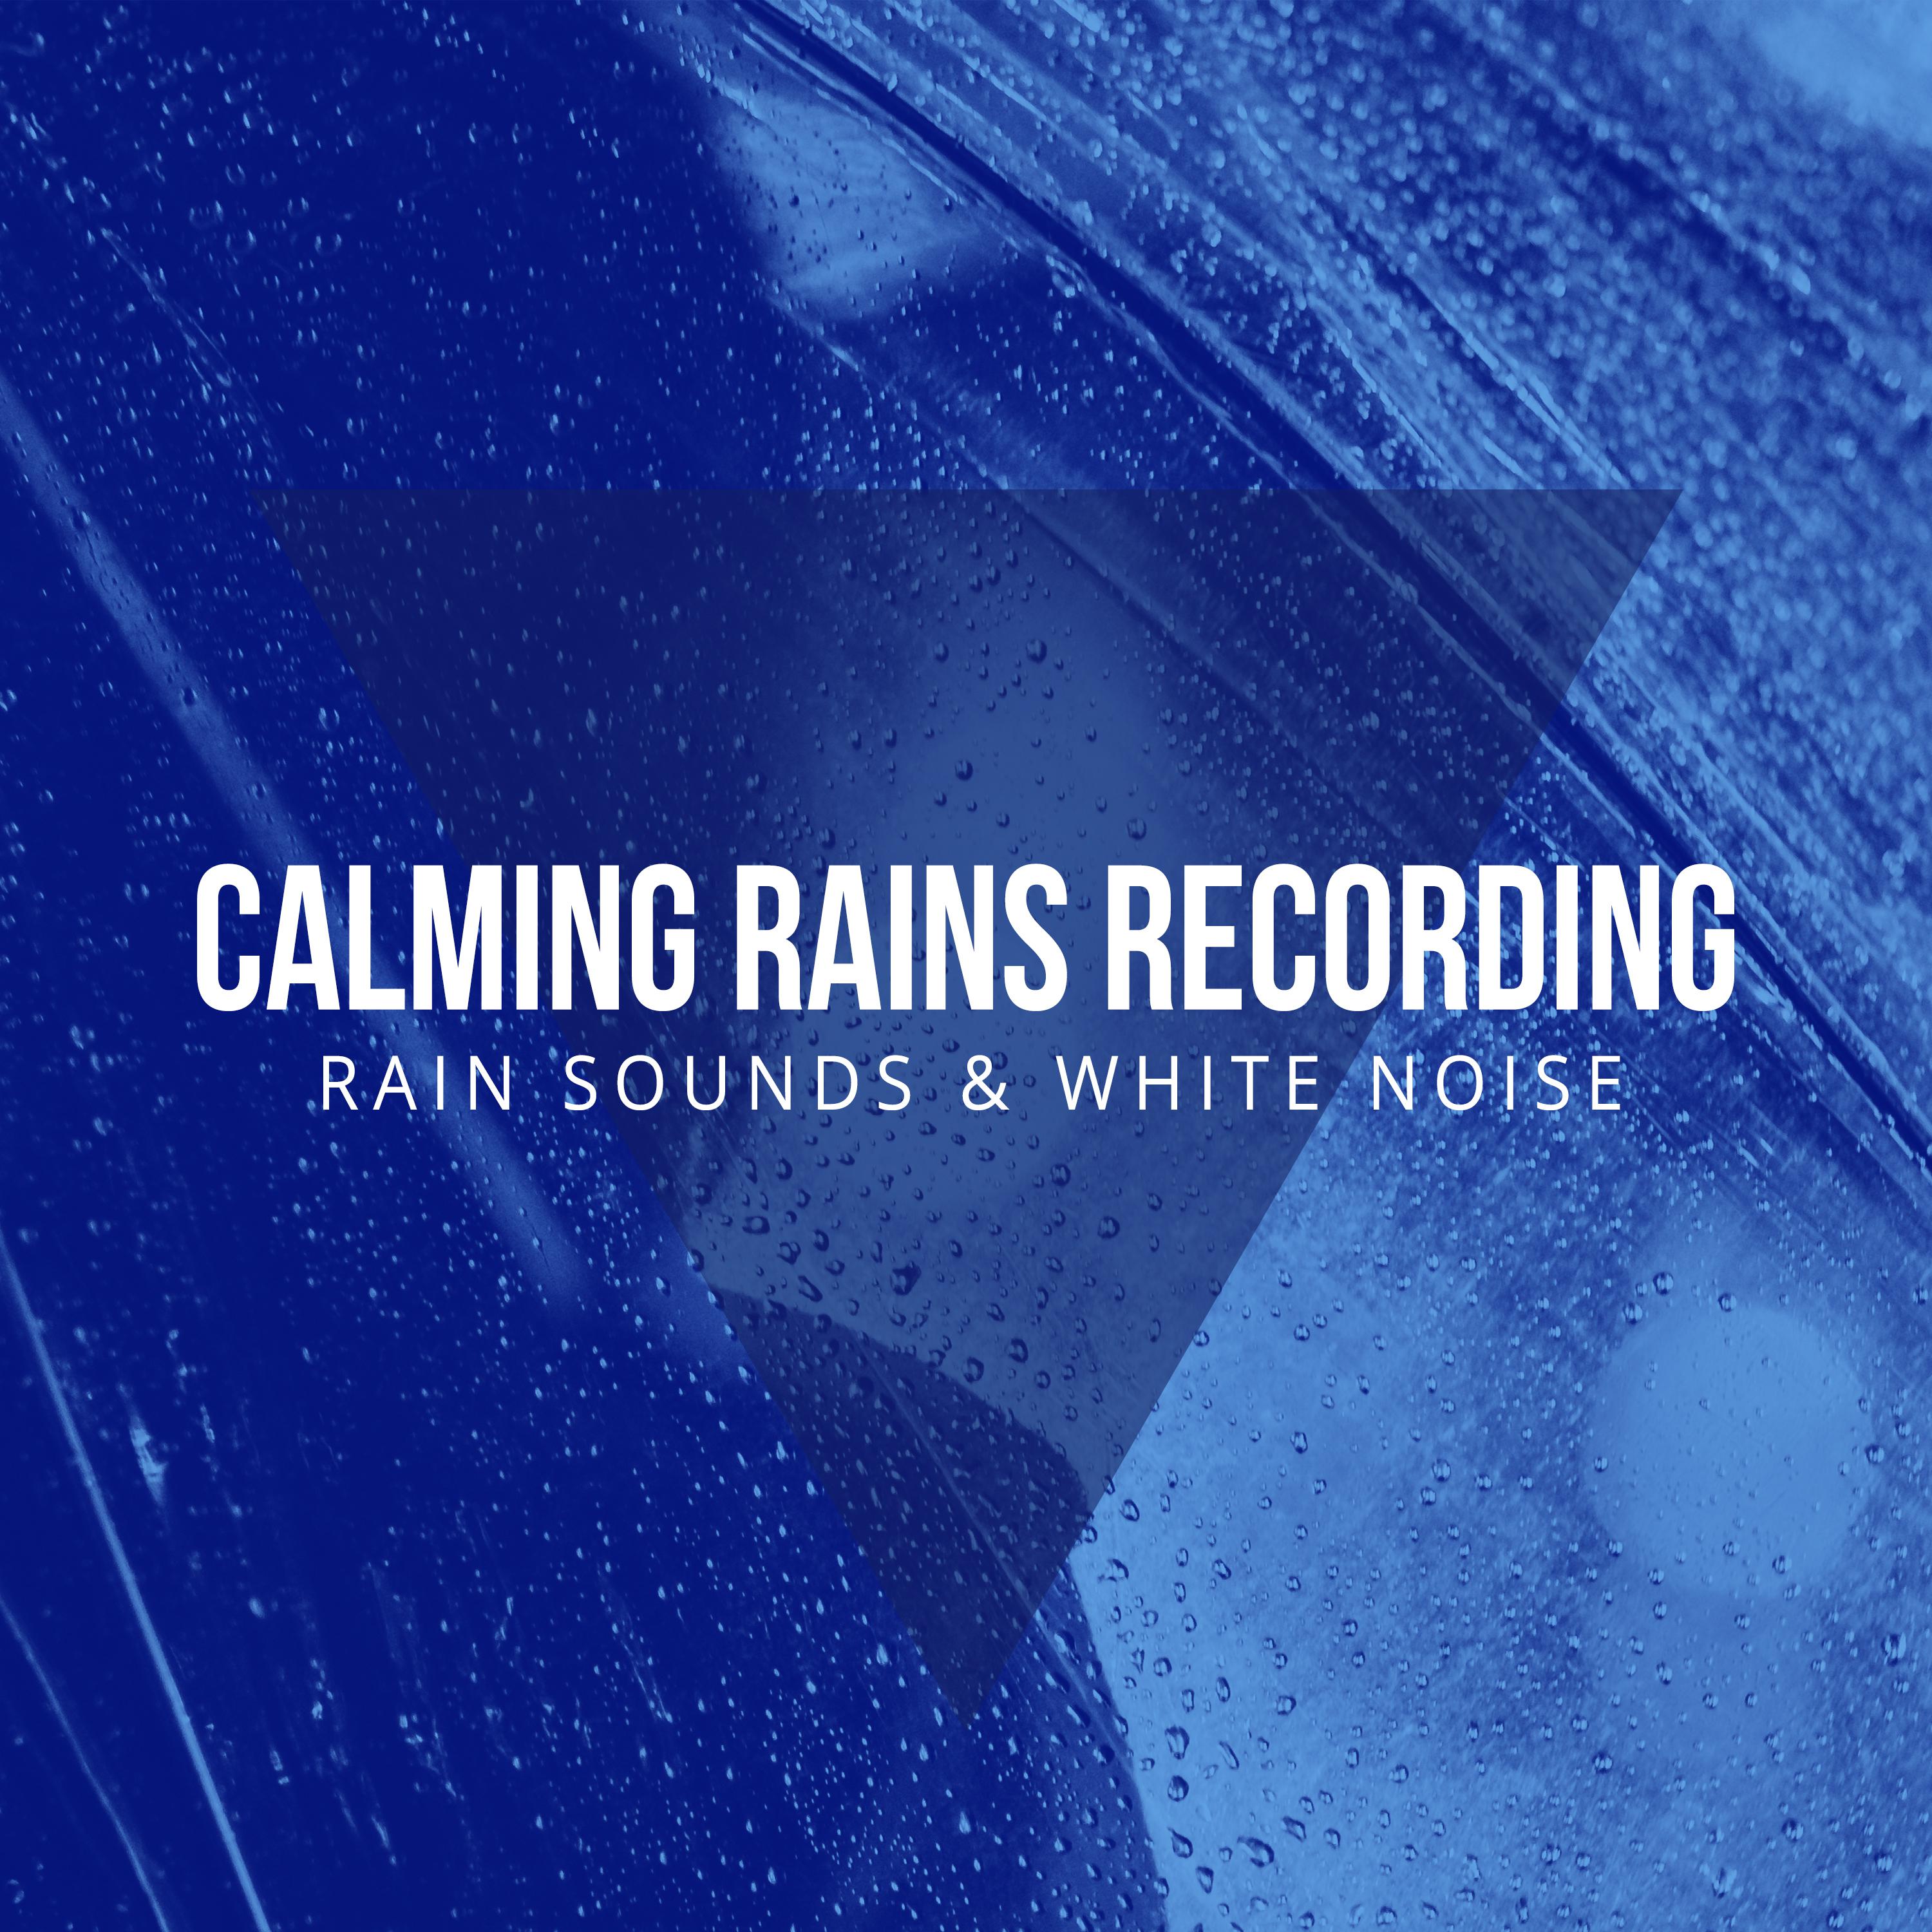 Calming Rains Recording